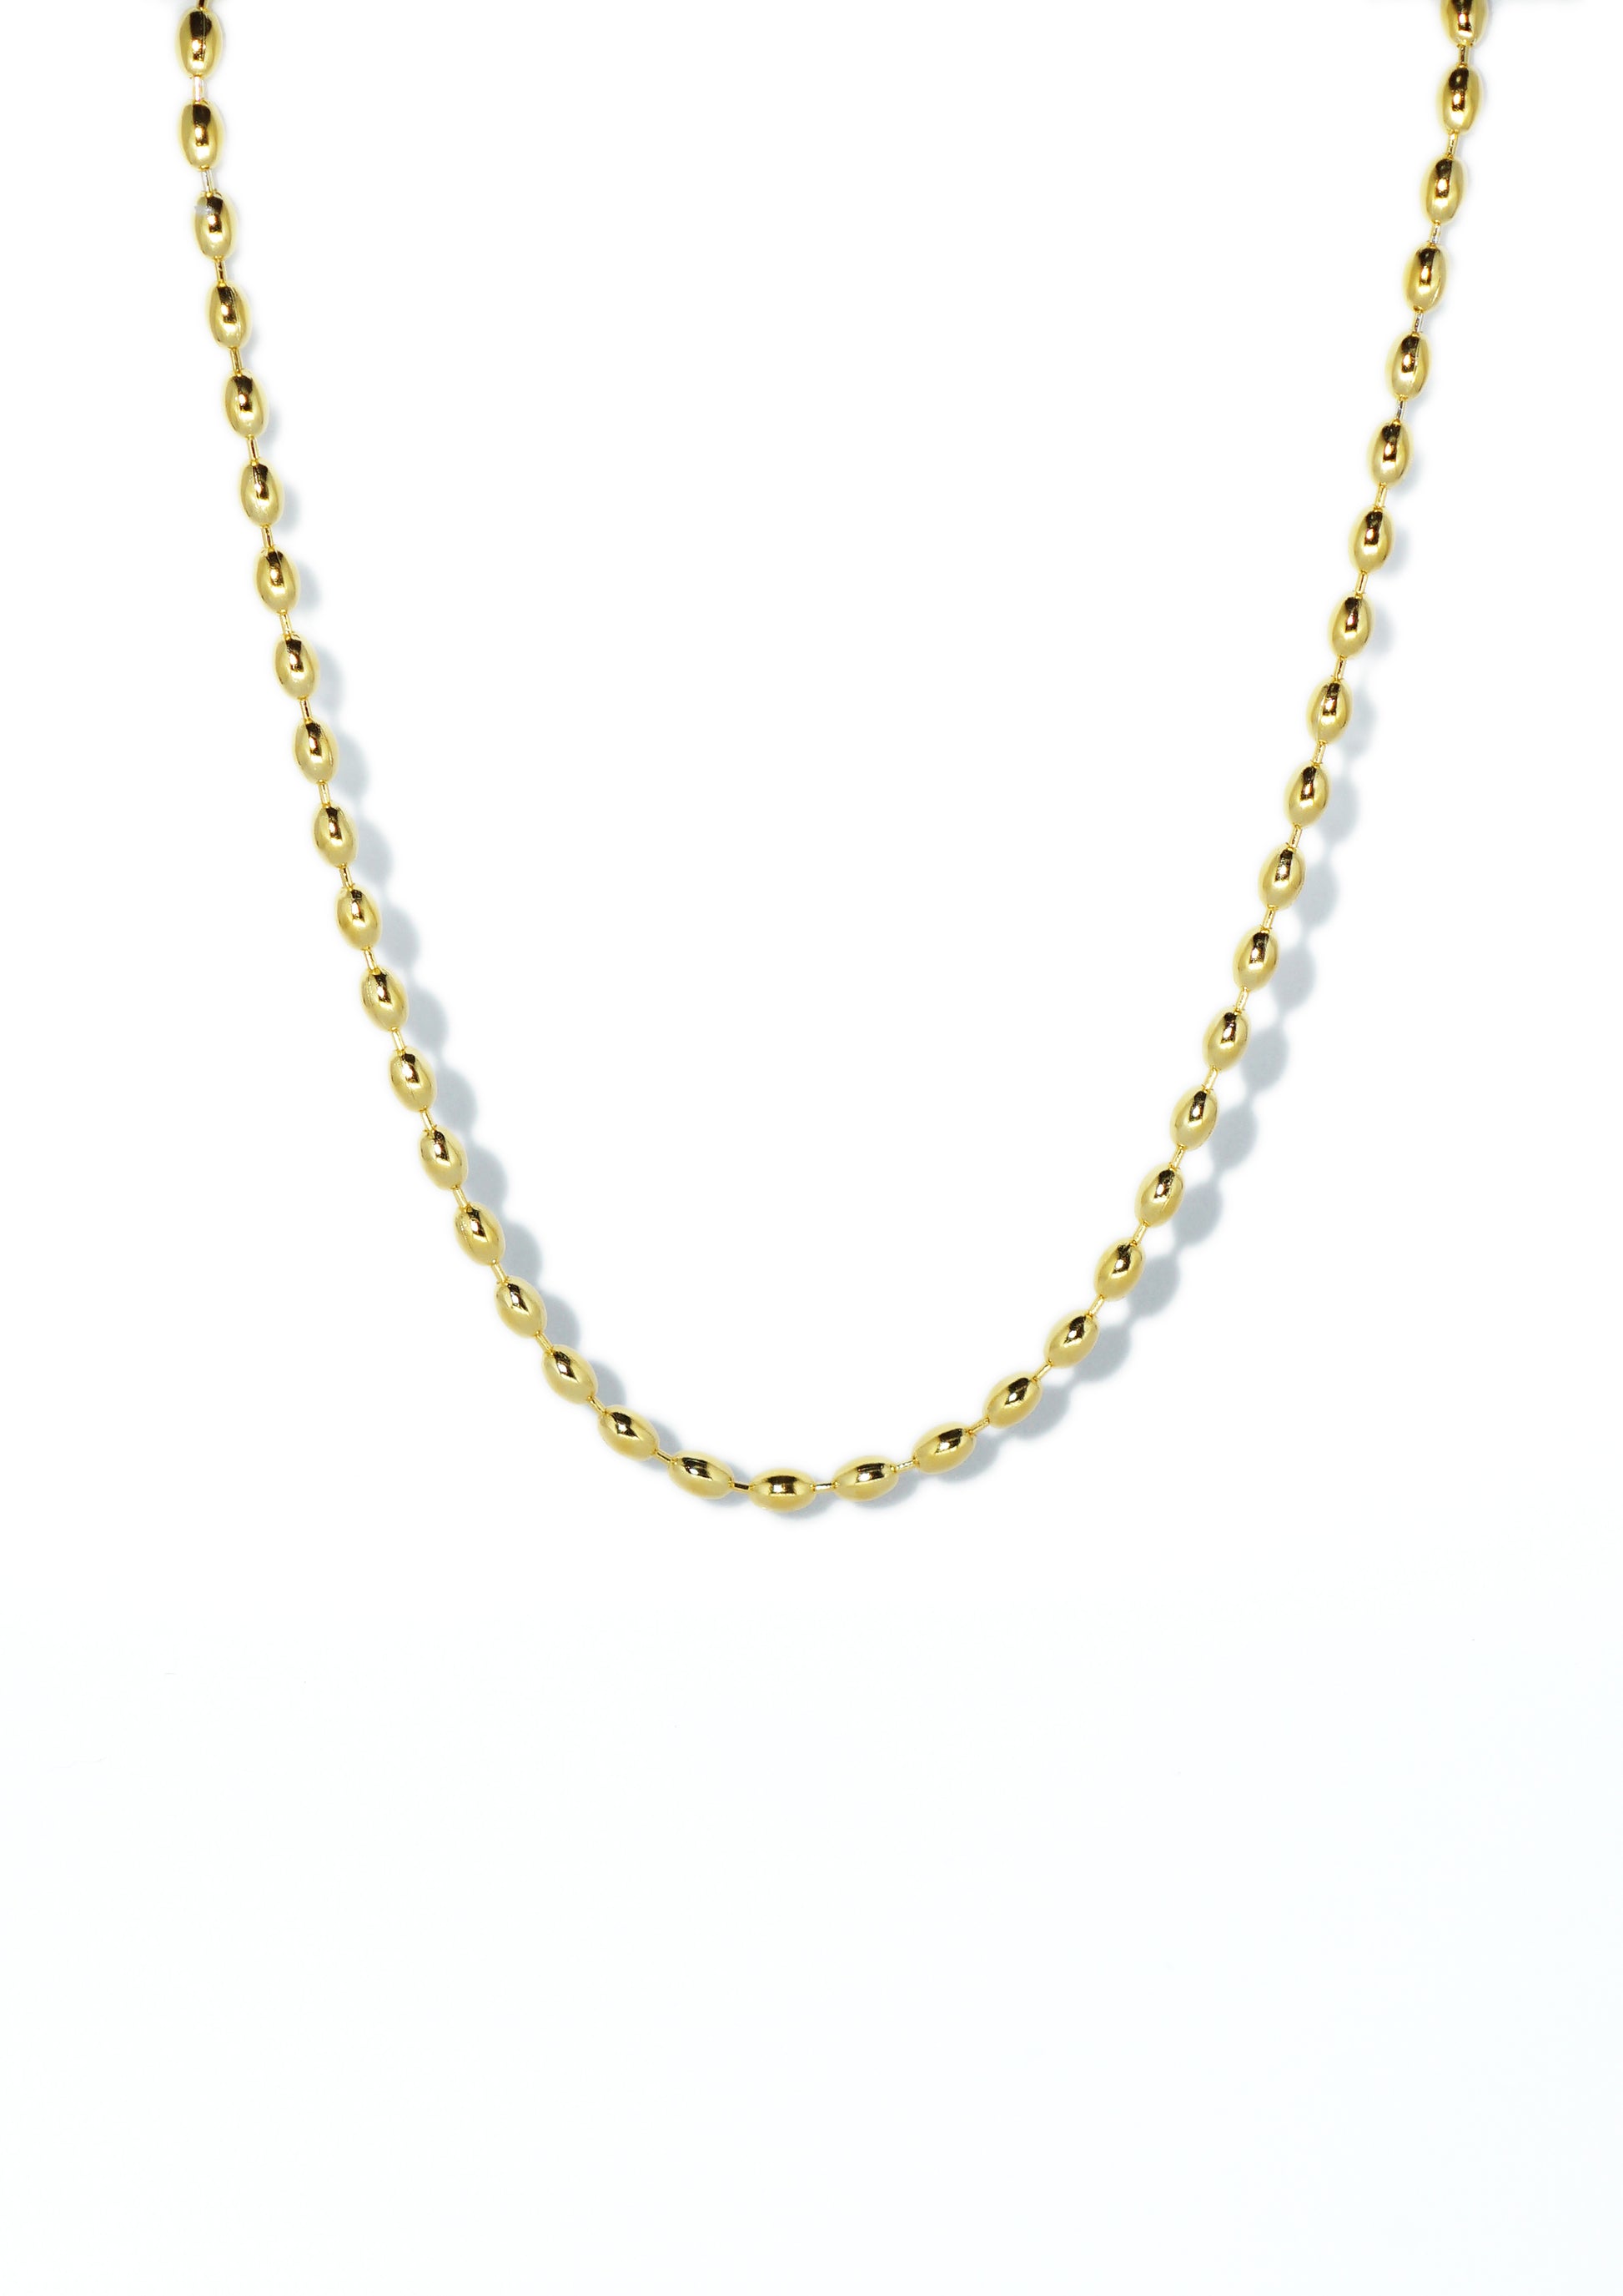 Bizu Gold Necklace - Catalog - Front View